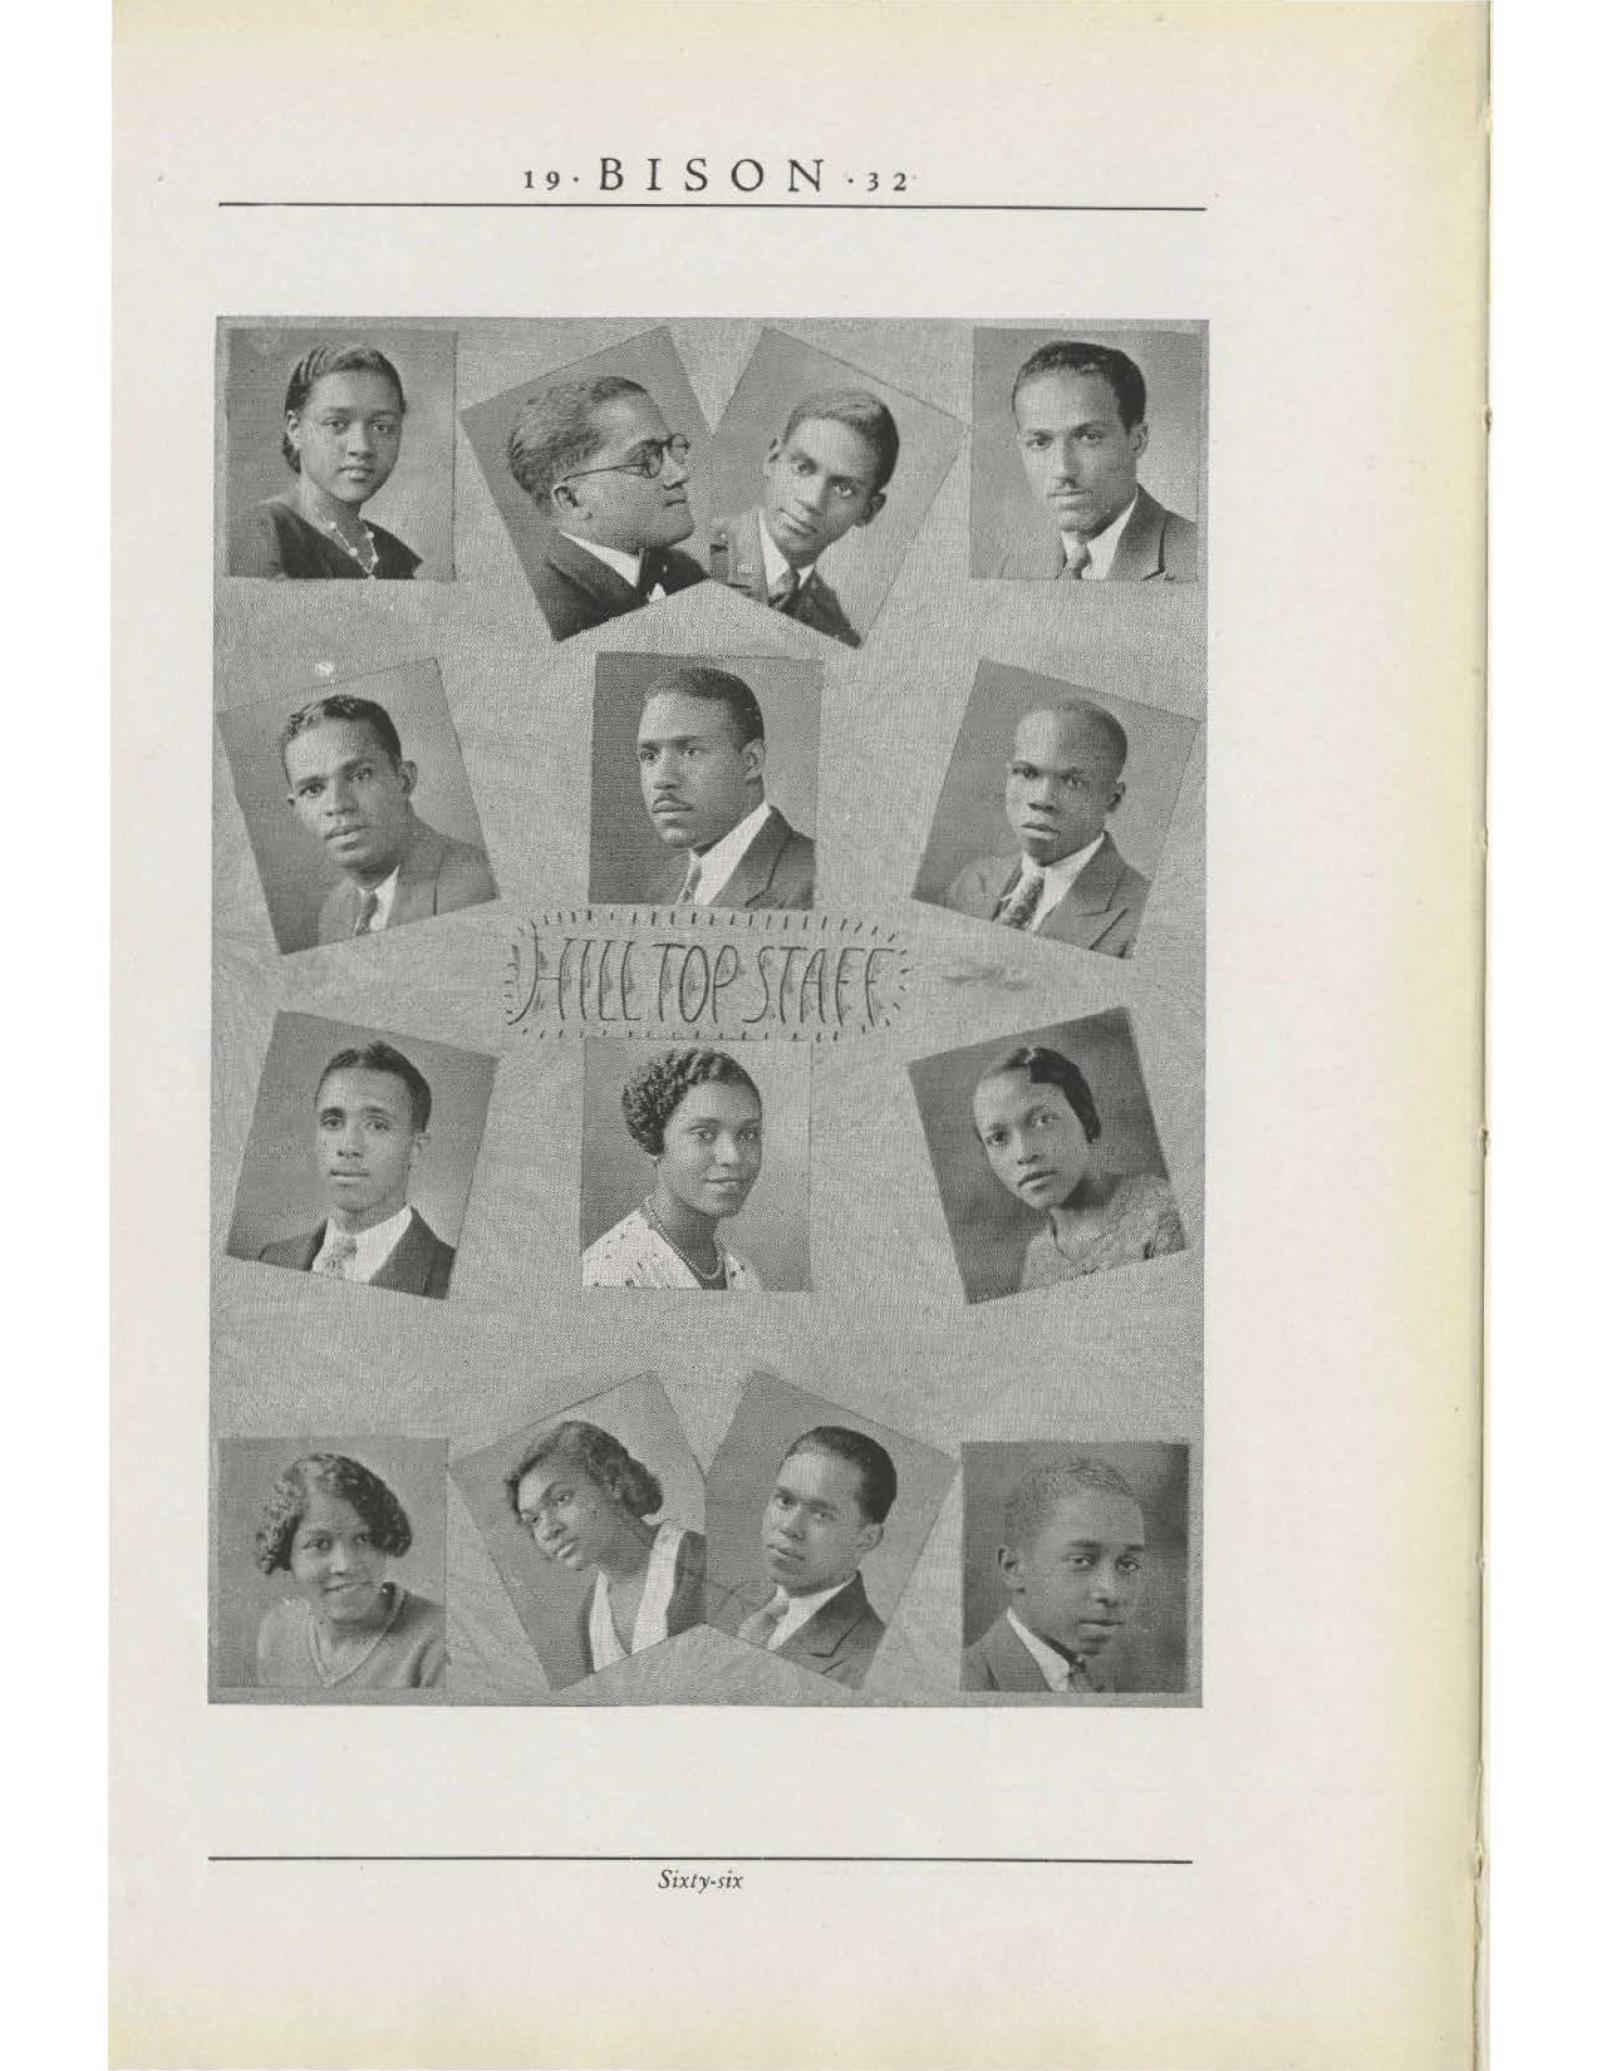 Bison Yearbook 1932 Hilltop staff